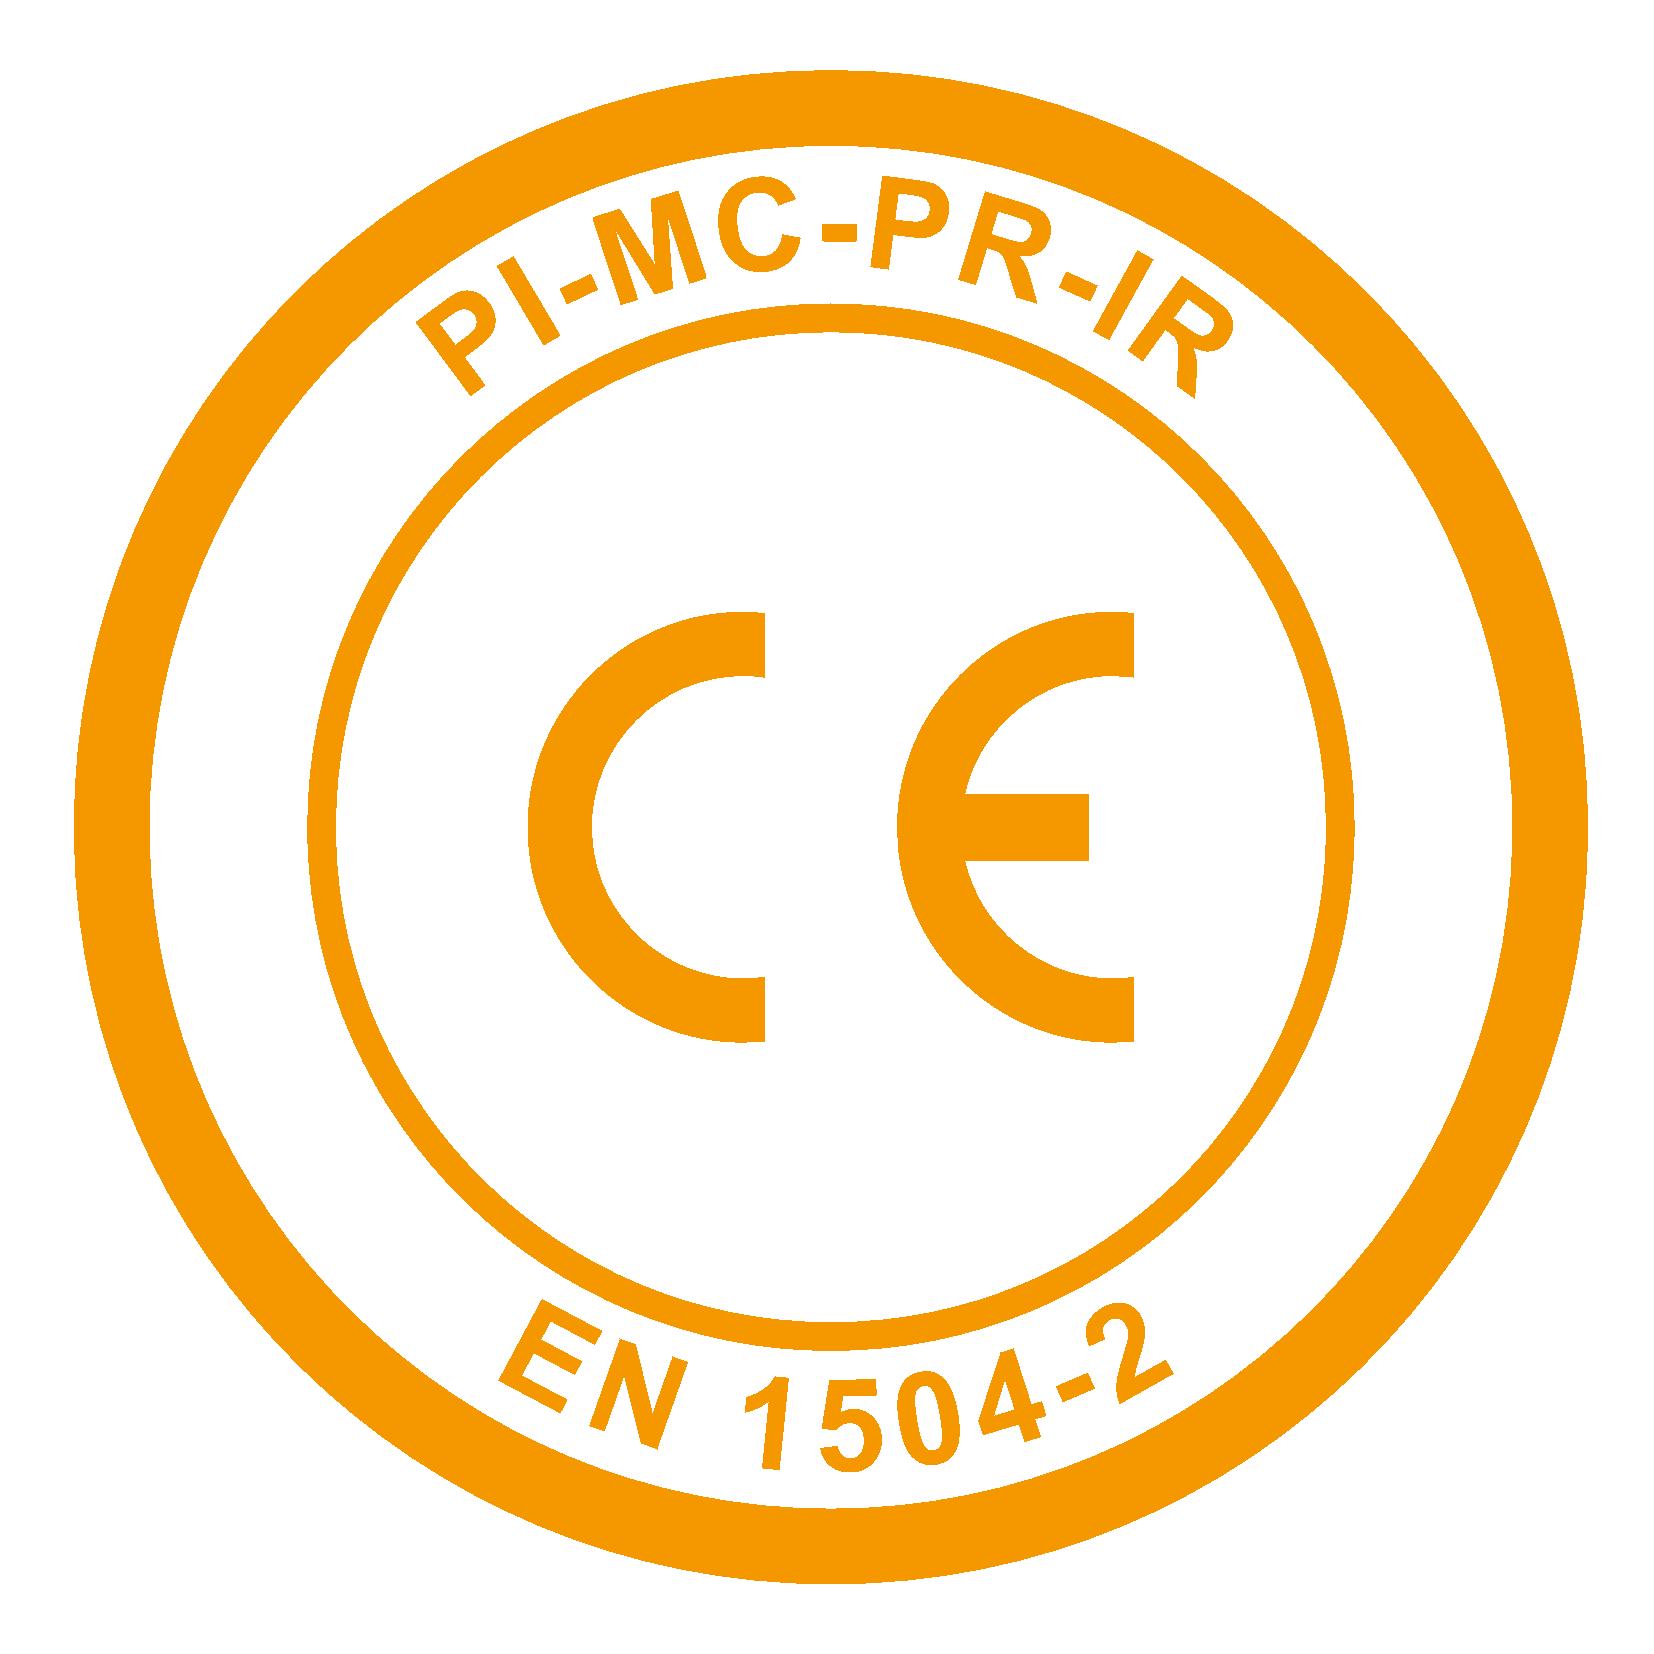 Categoria PI-MC-PR-IR (UNI EN 1504-2)